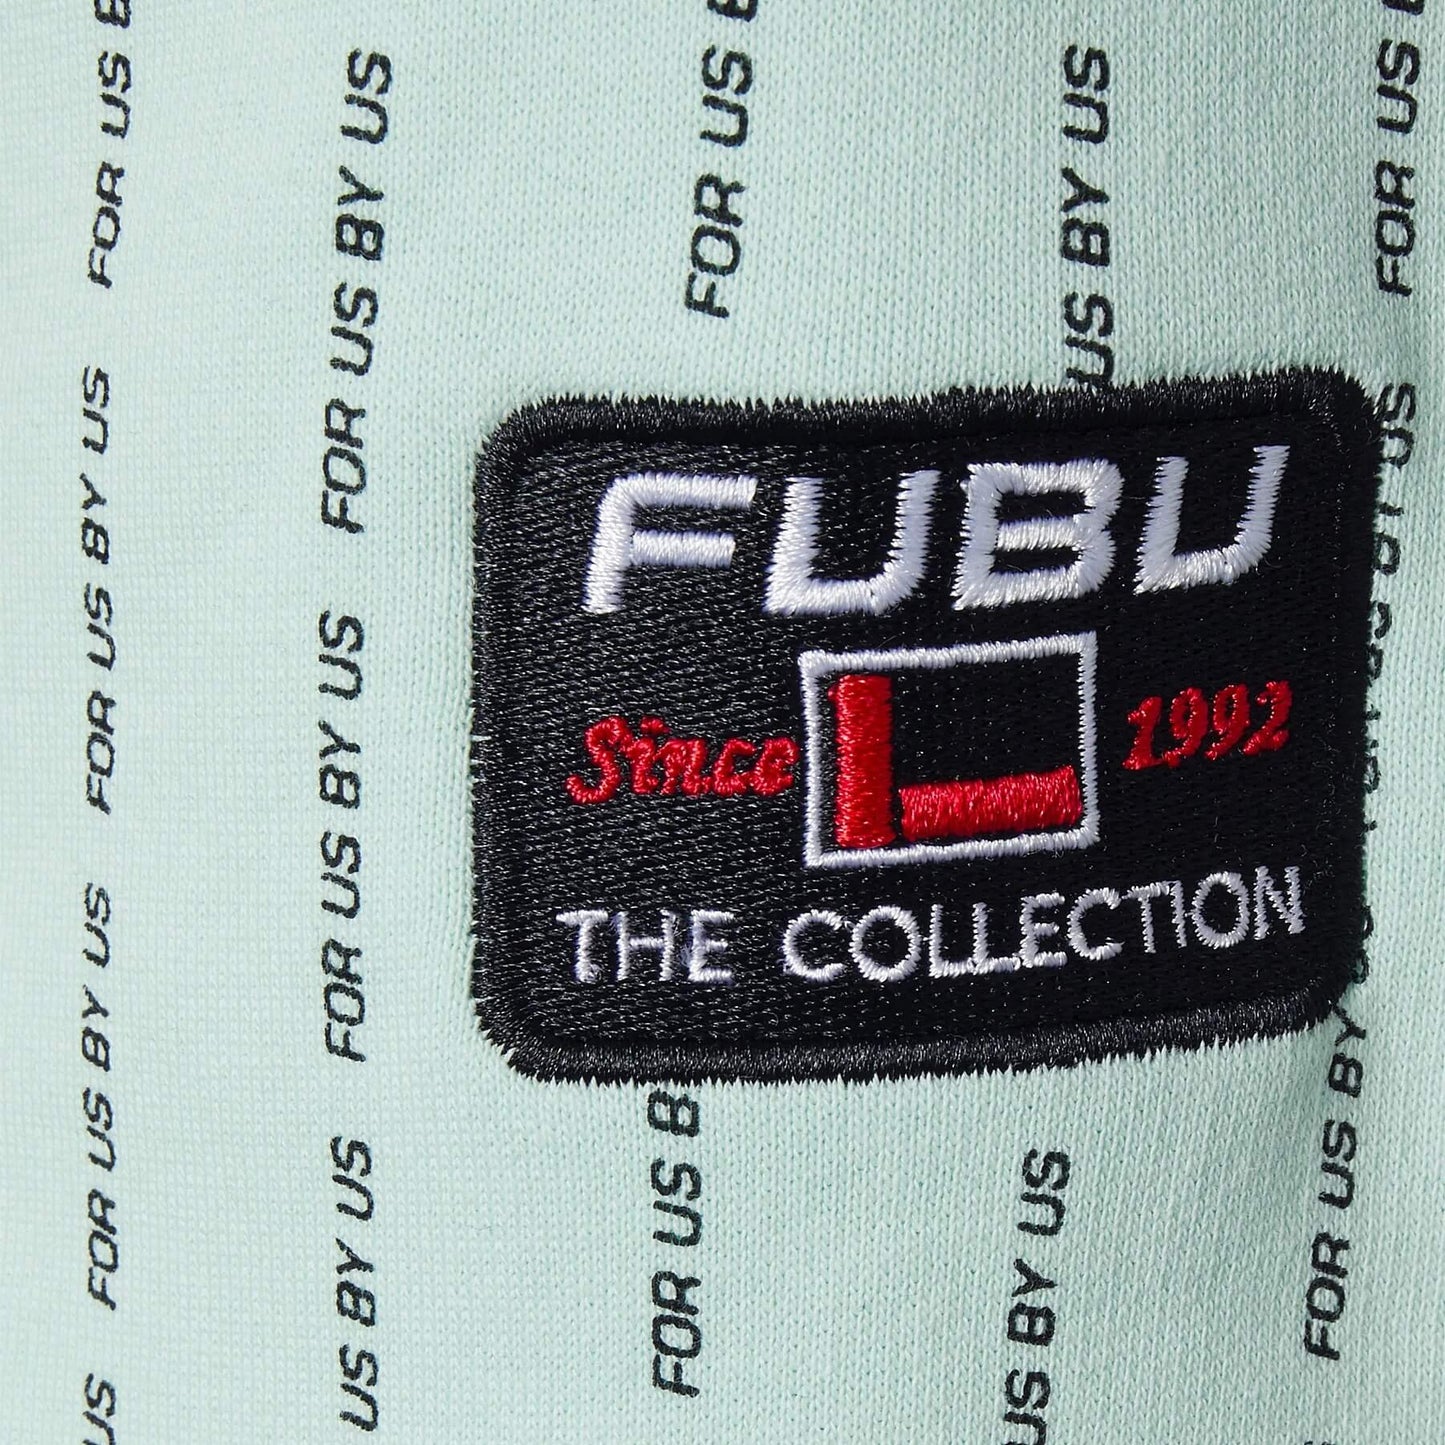 FUBU Corporate Fubu Pinstripe Hoodie mint/black